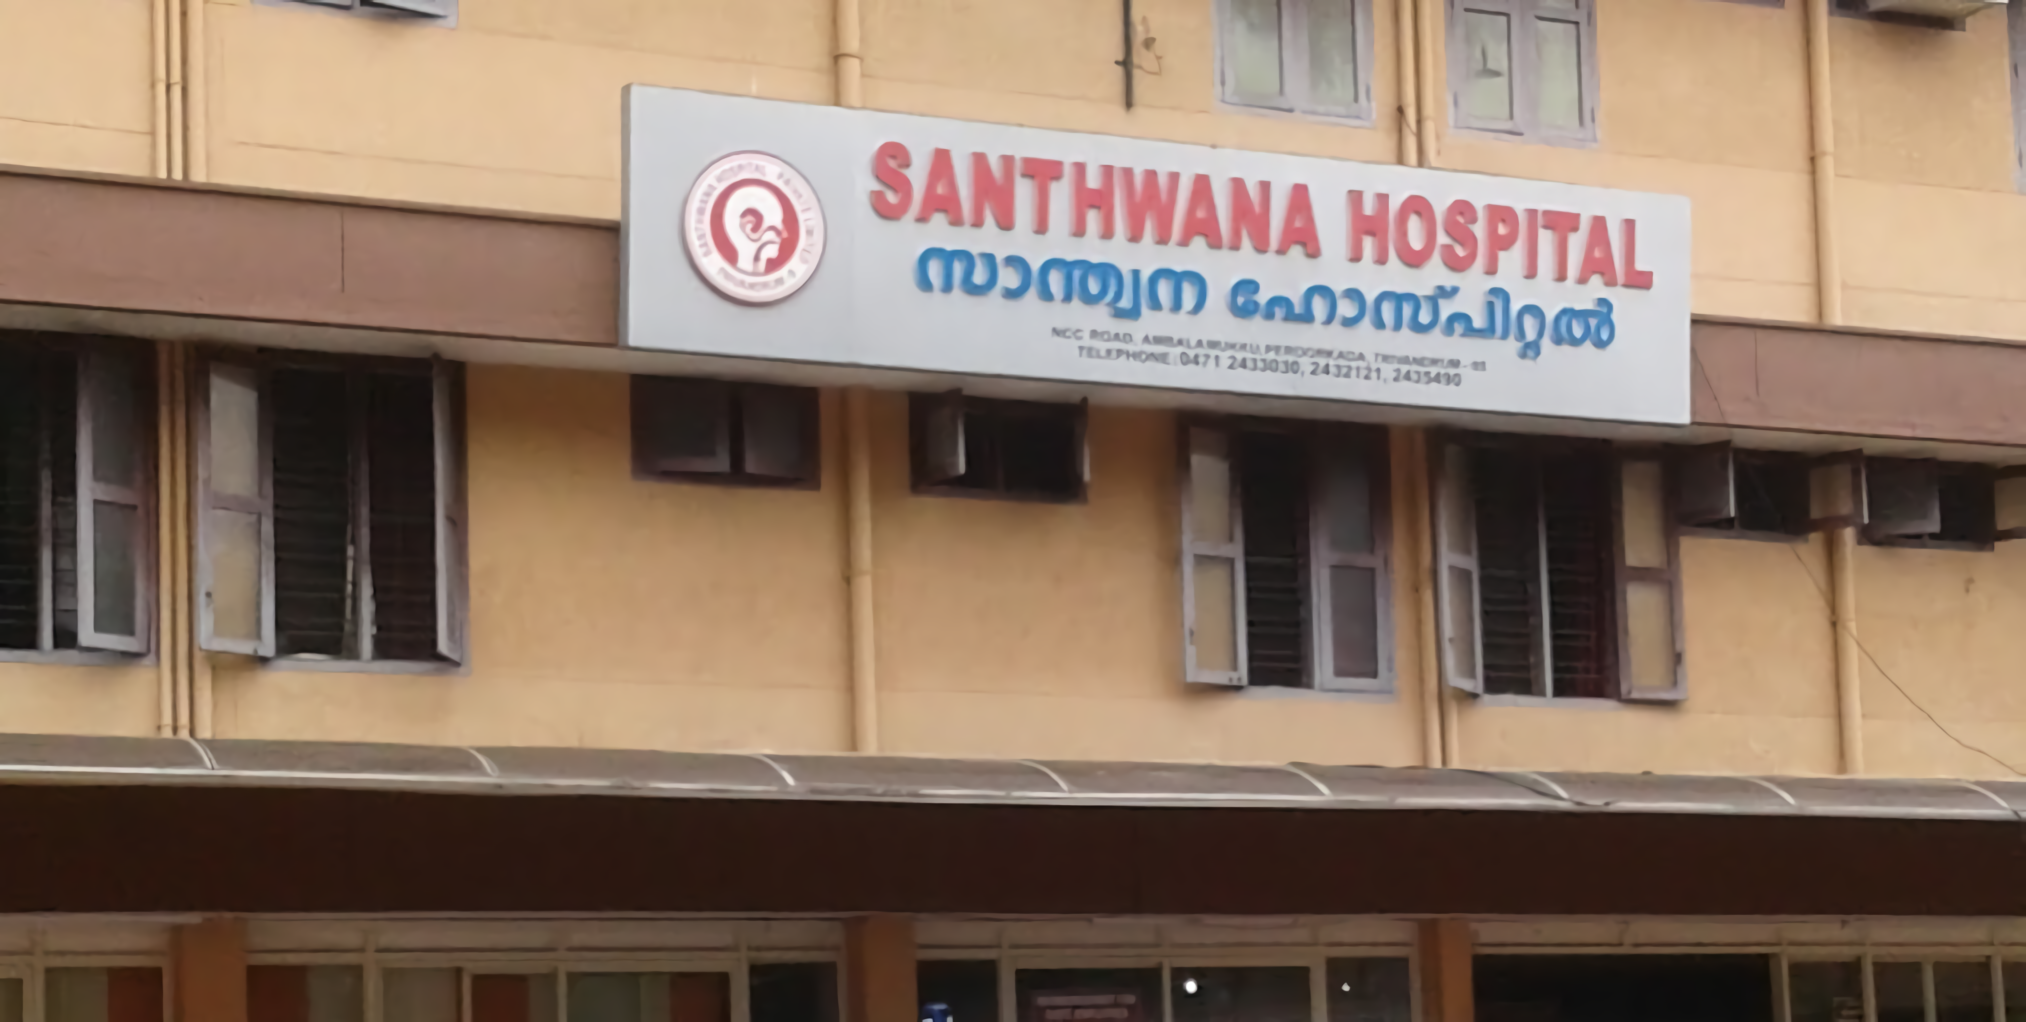 Santhwana Hospital photo